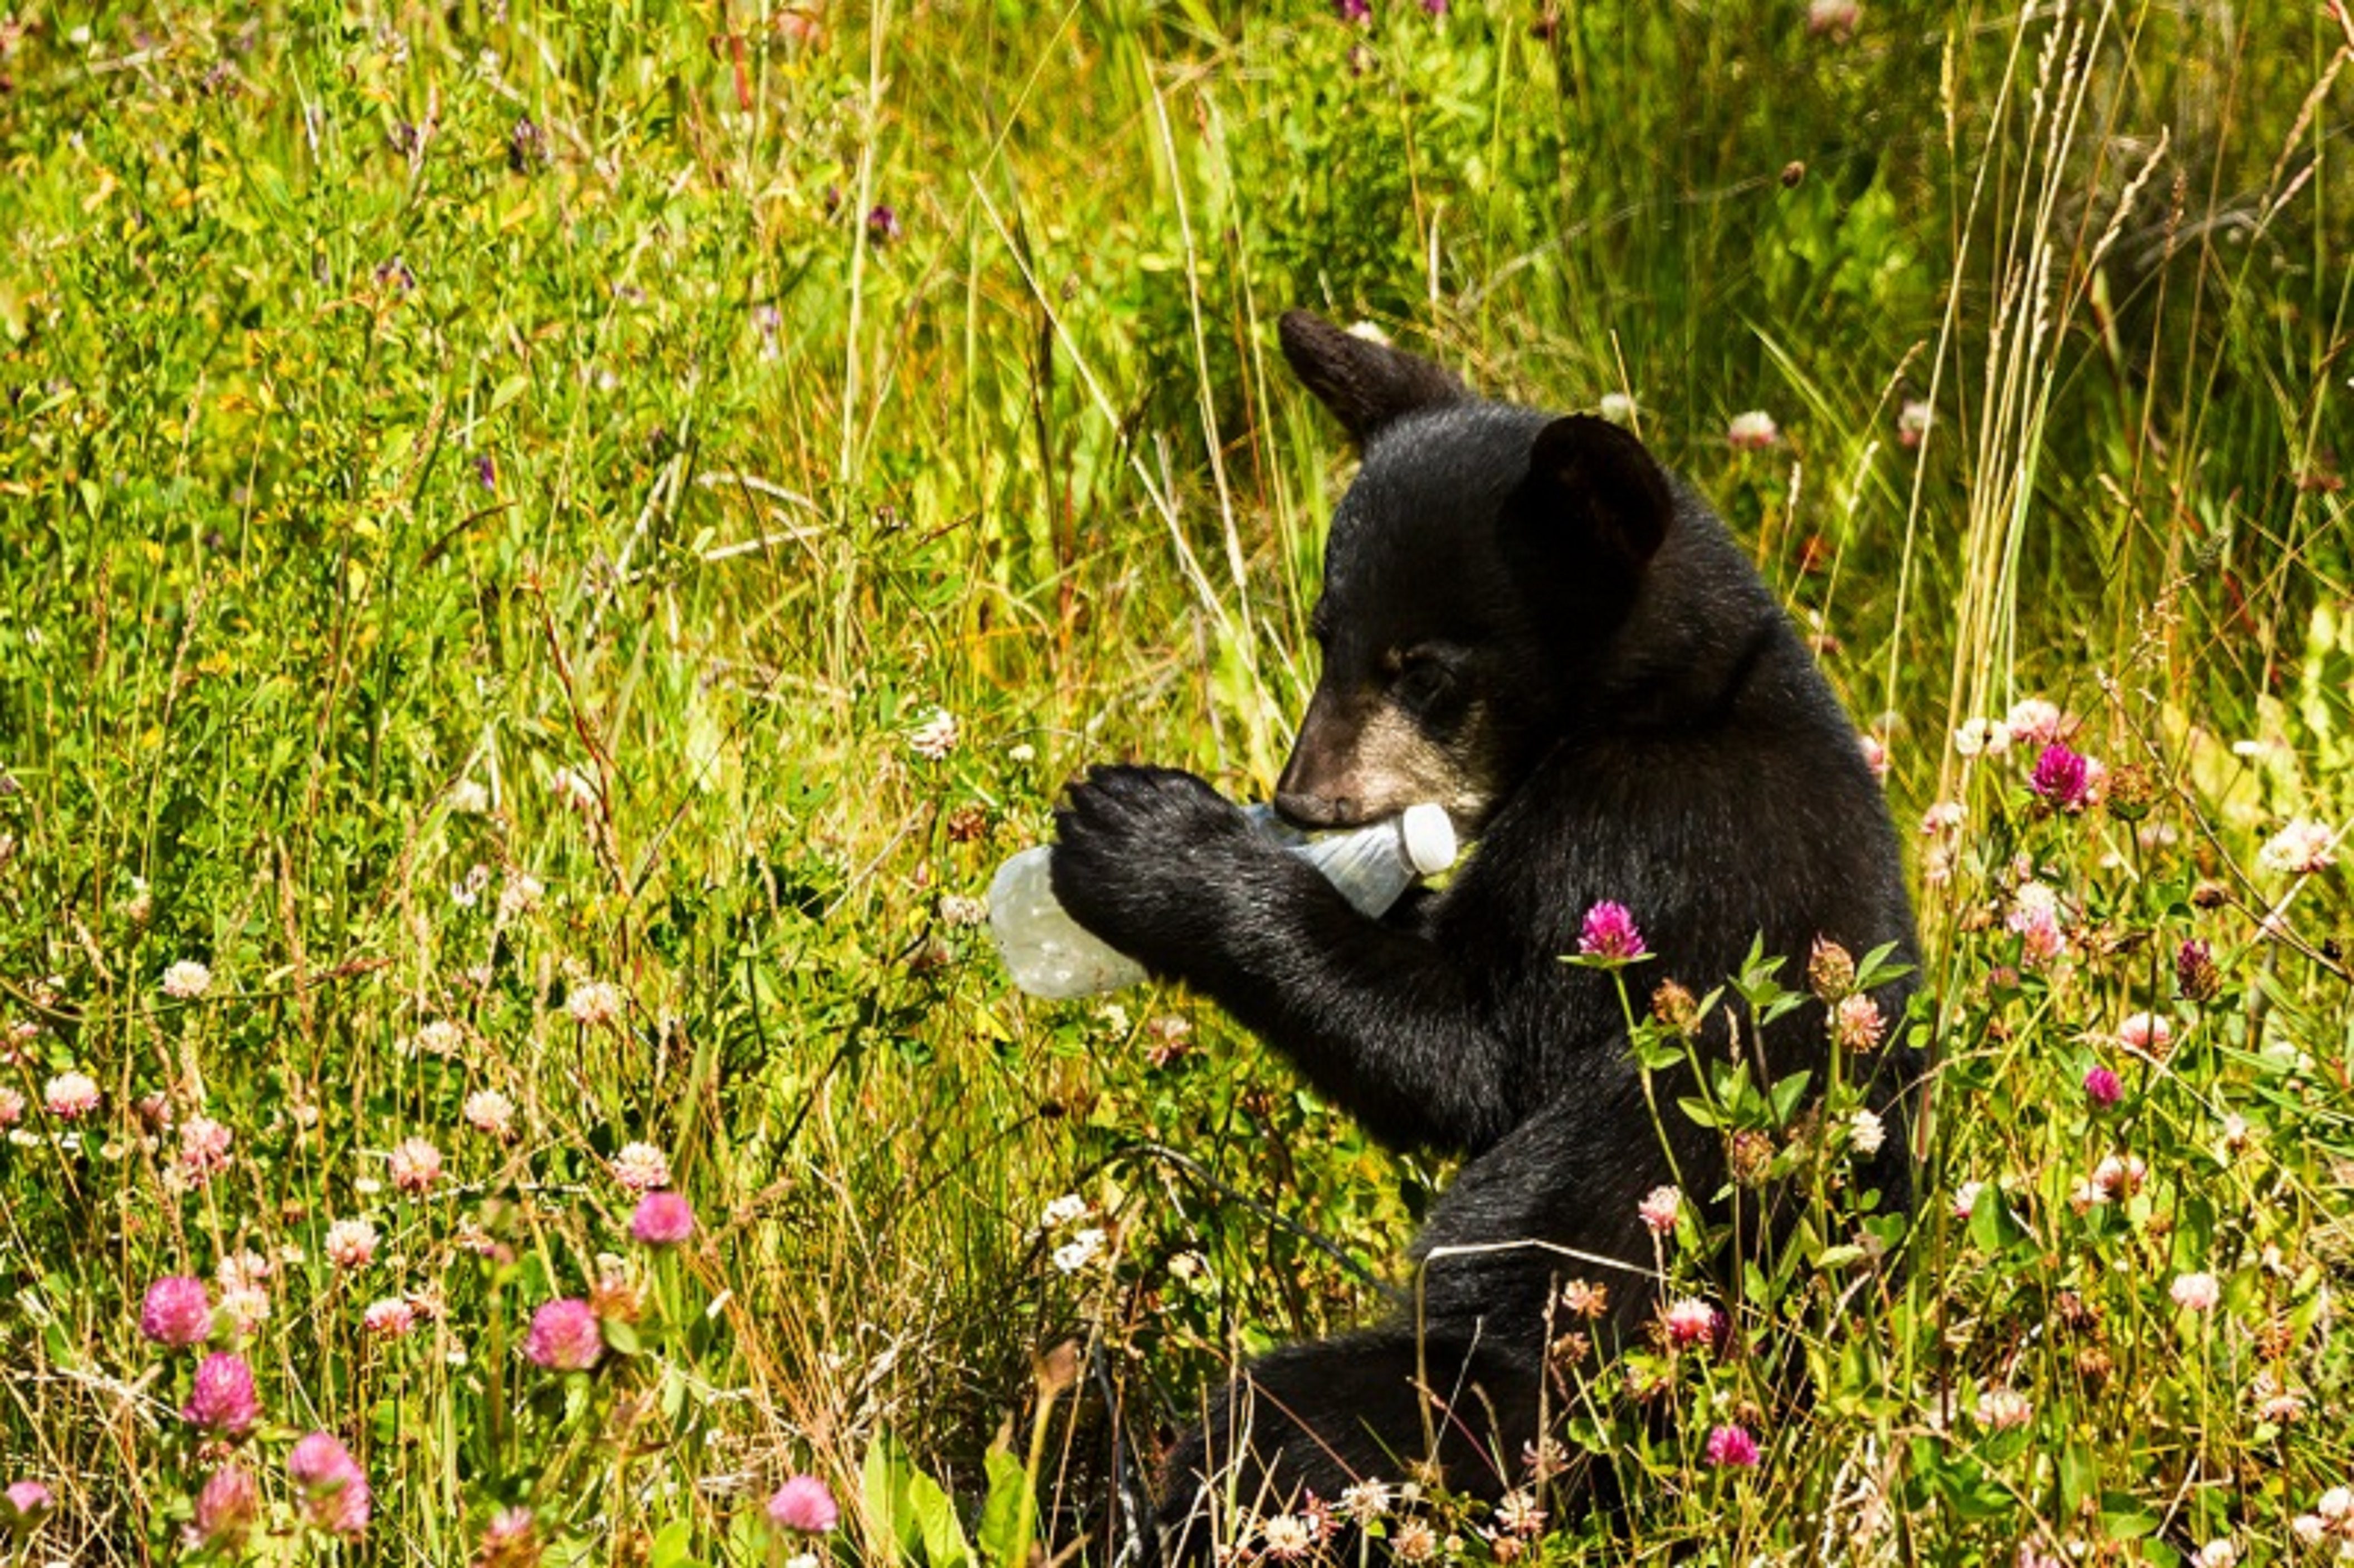 Bear cub eating plastic bottle